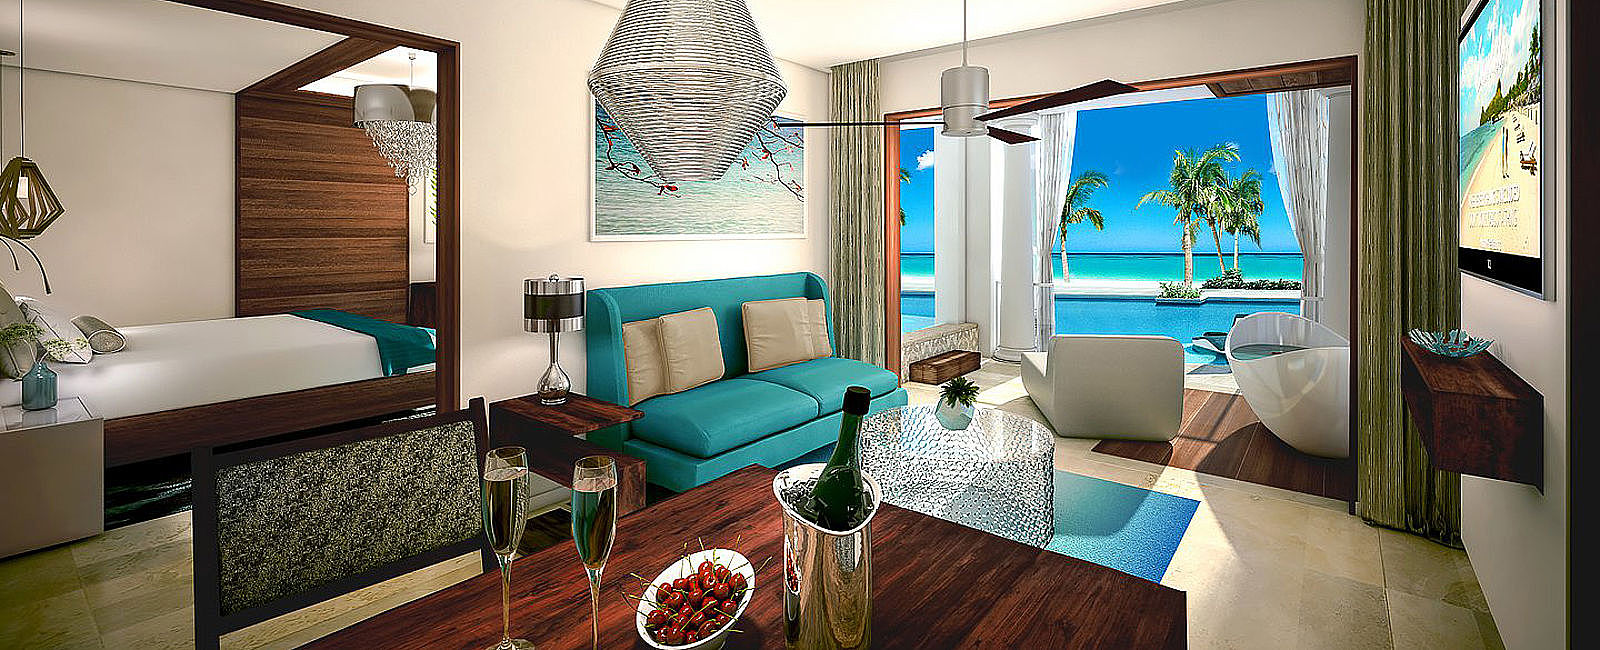 HOTEL ANGEBOTE
 Sandals Royal Barbados: -60%  
